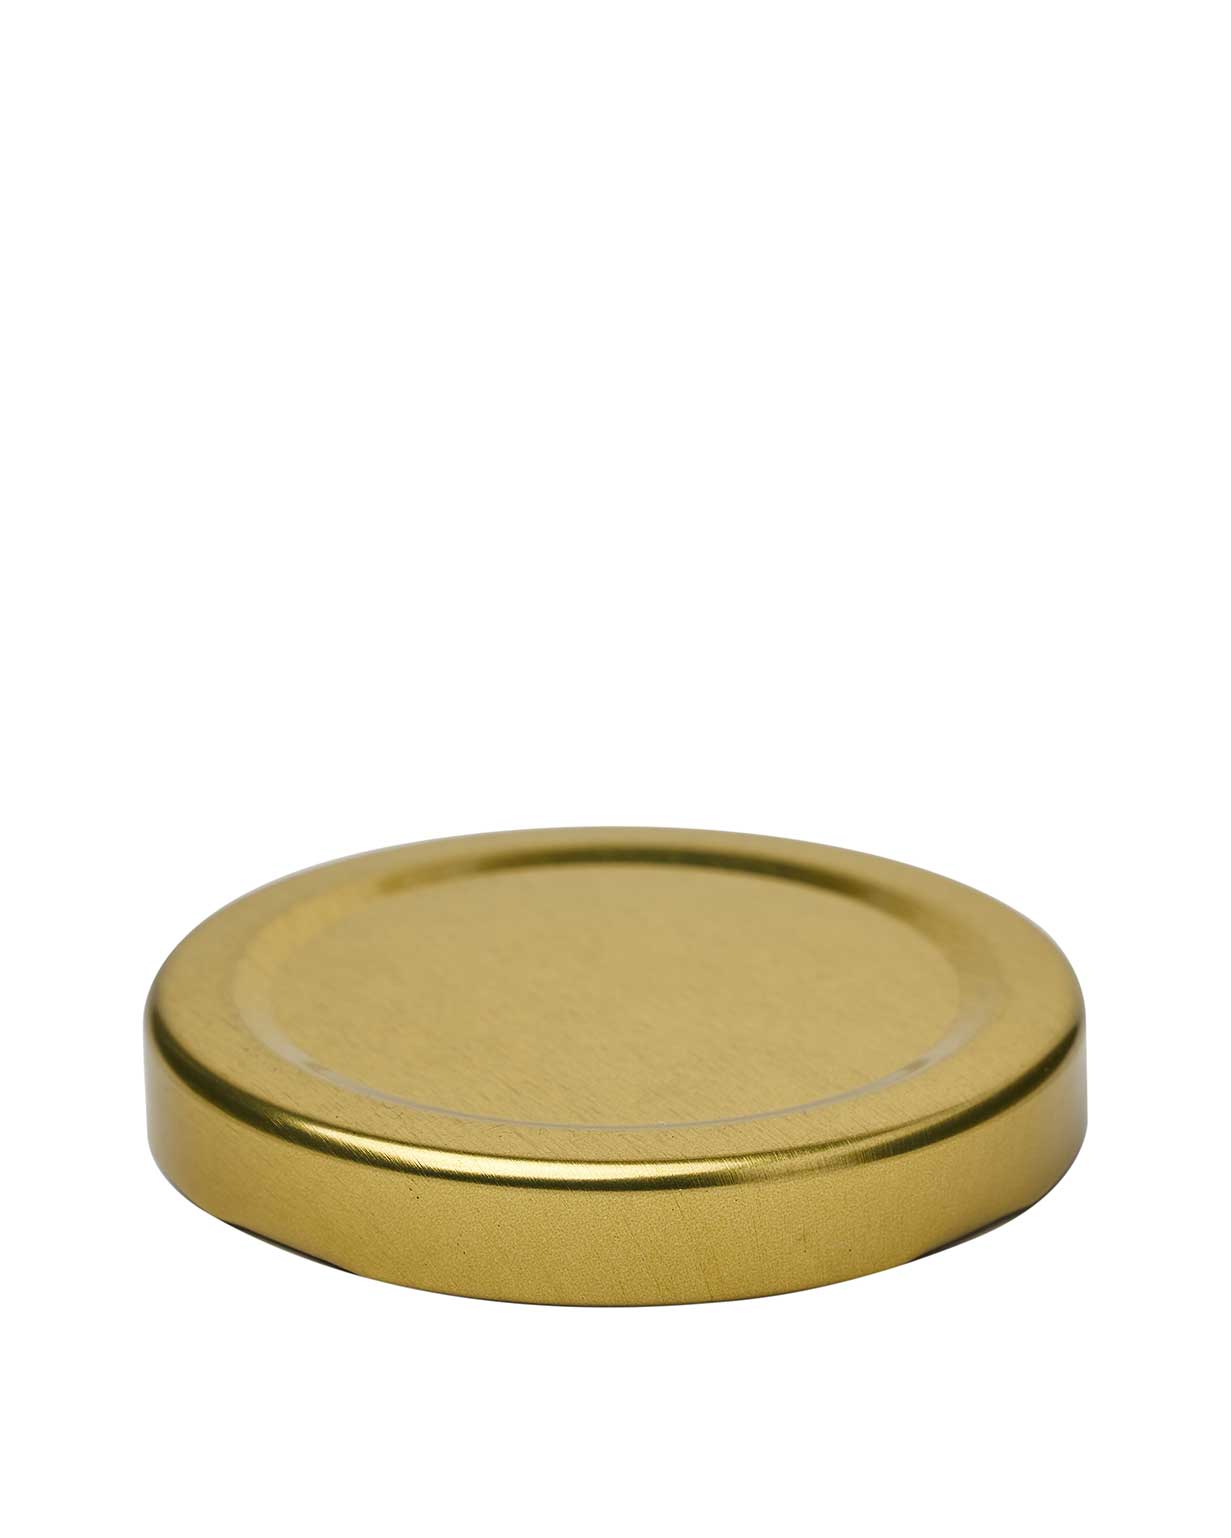 43mm metal gold no button lug closure